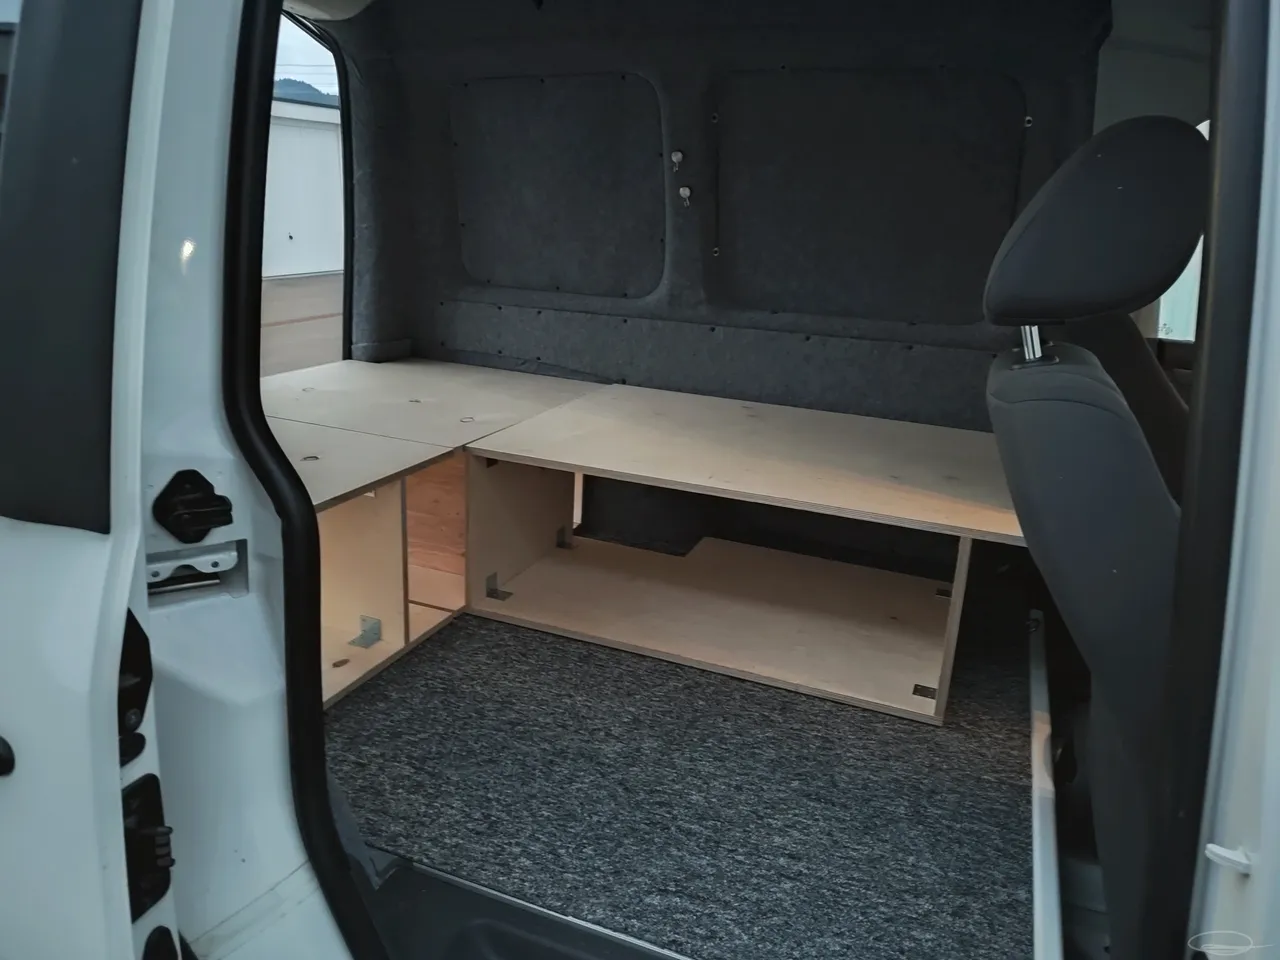 Hive bought me a Volkswagen Caddy III (Caddy 2k) - my Camper Van for photo trips - Johann Piber